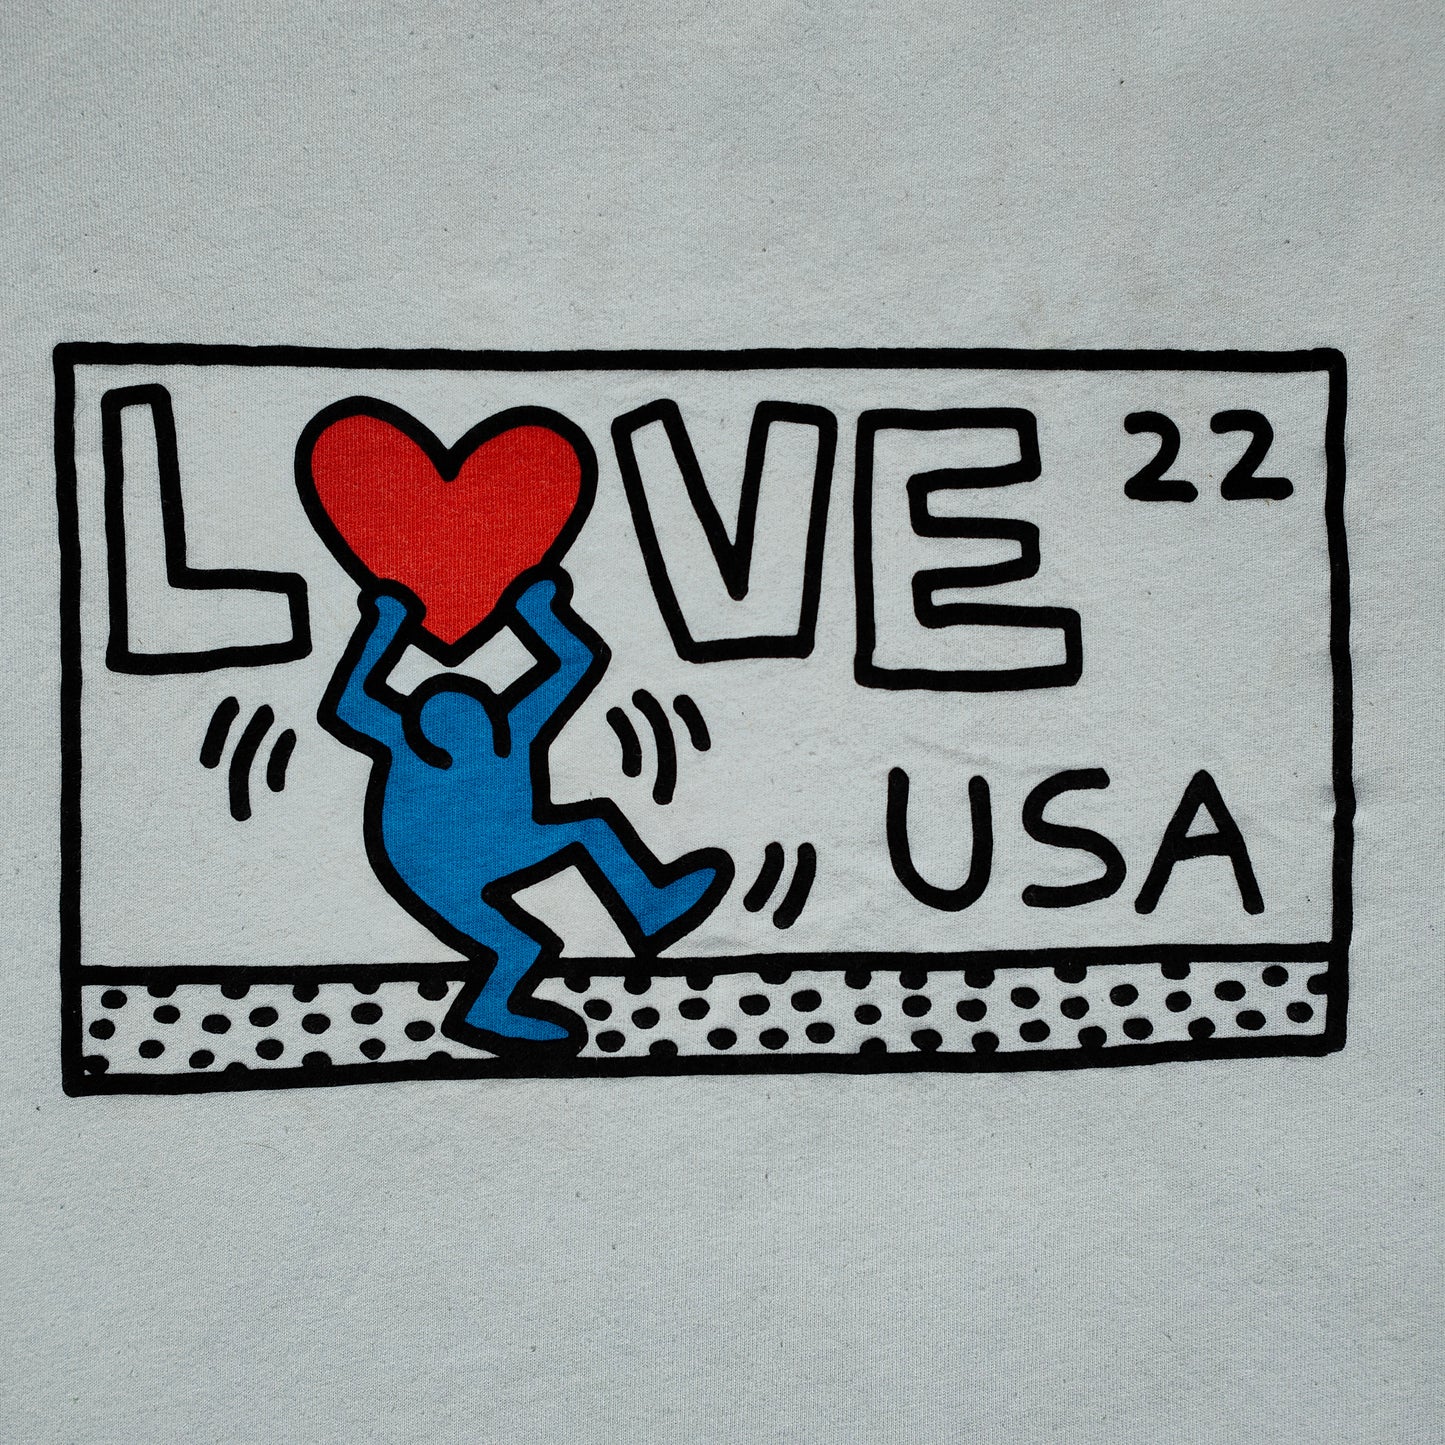 Uniqlo Keith Haring T Shirt - XXL